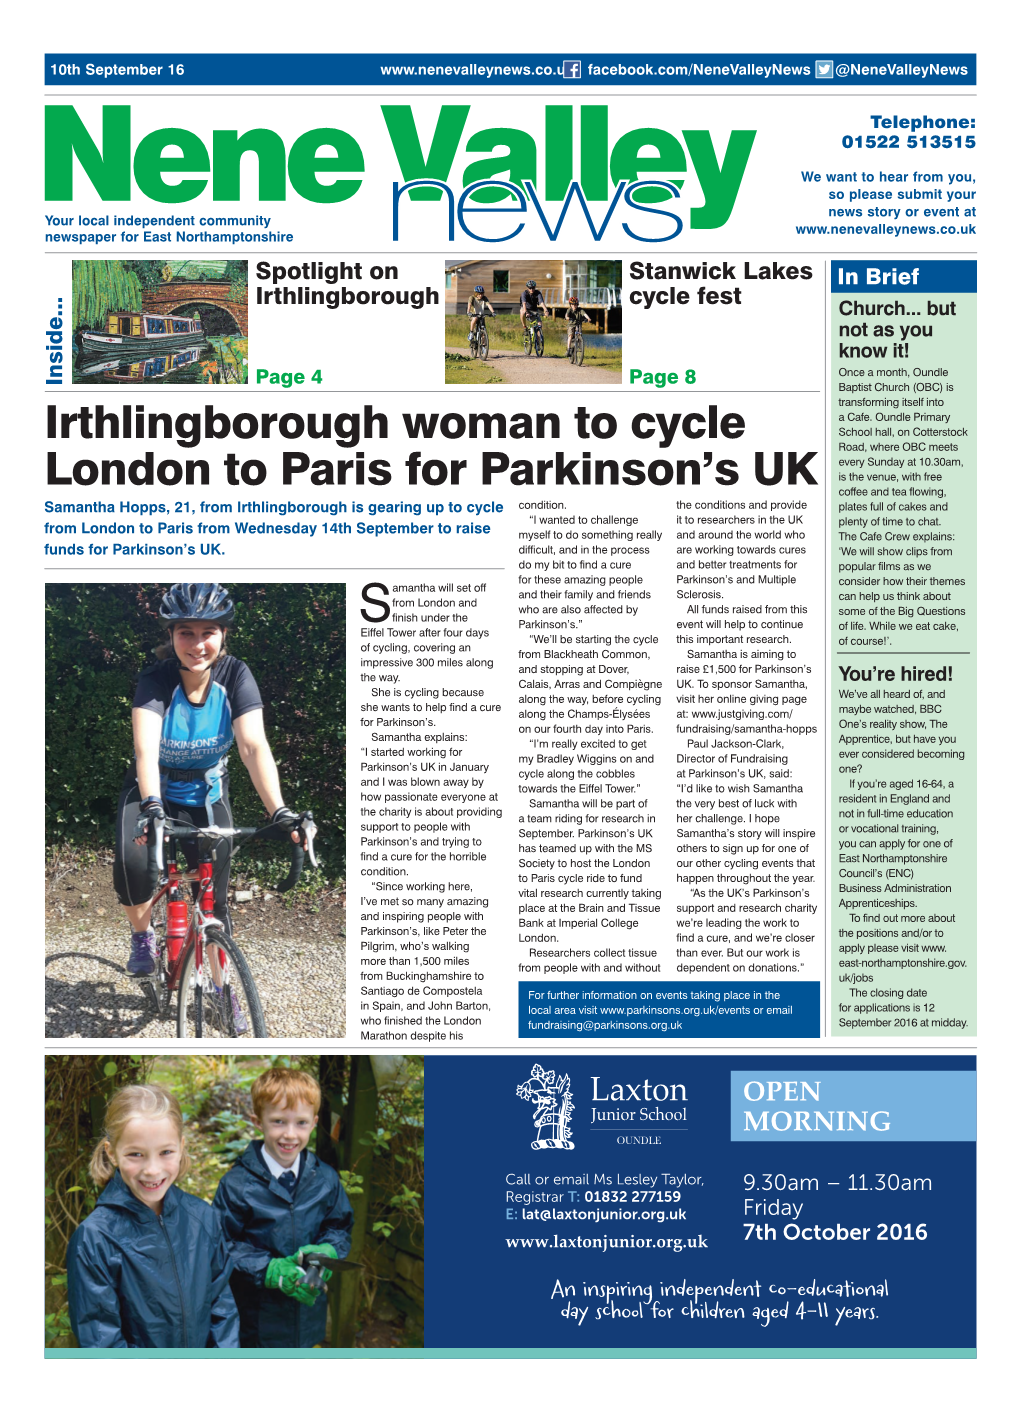 Irthlingborough Woman to Cycle London to Paris for Parkinson's UK